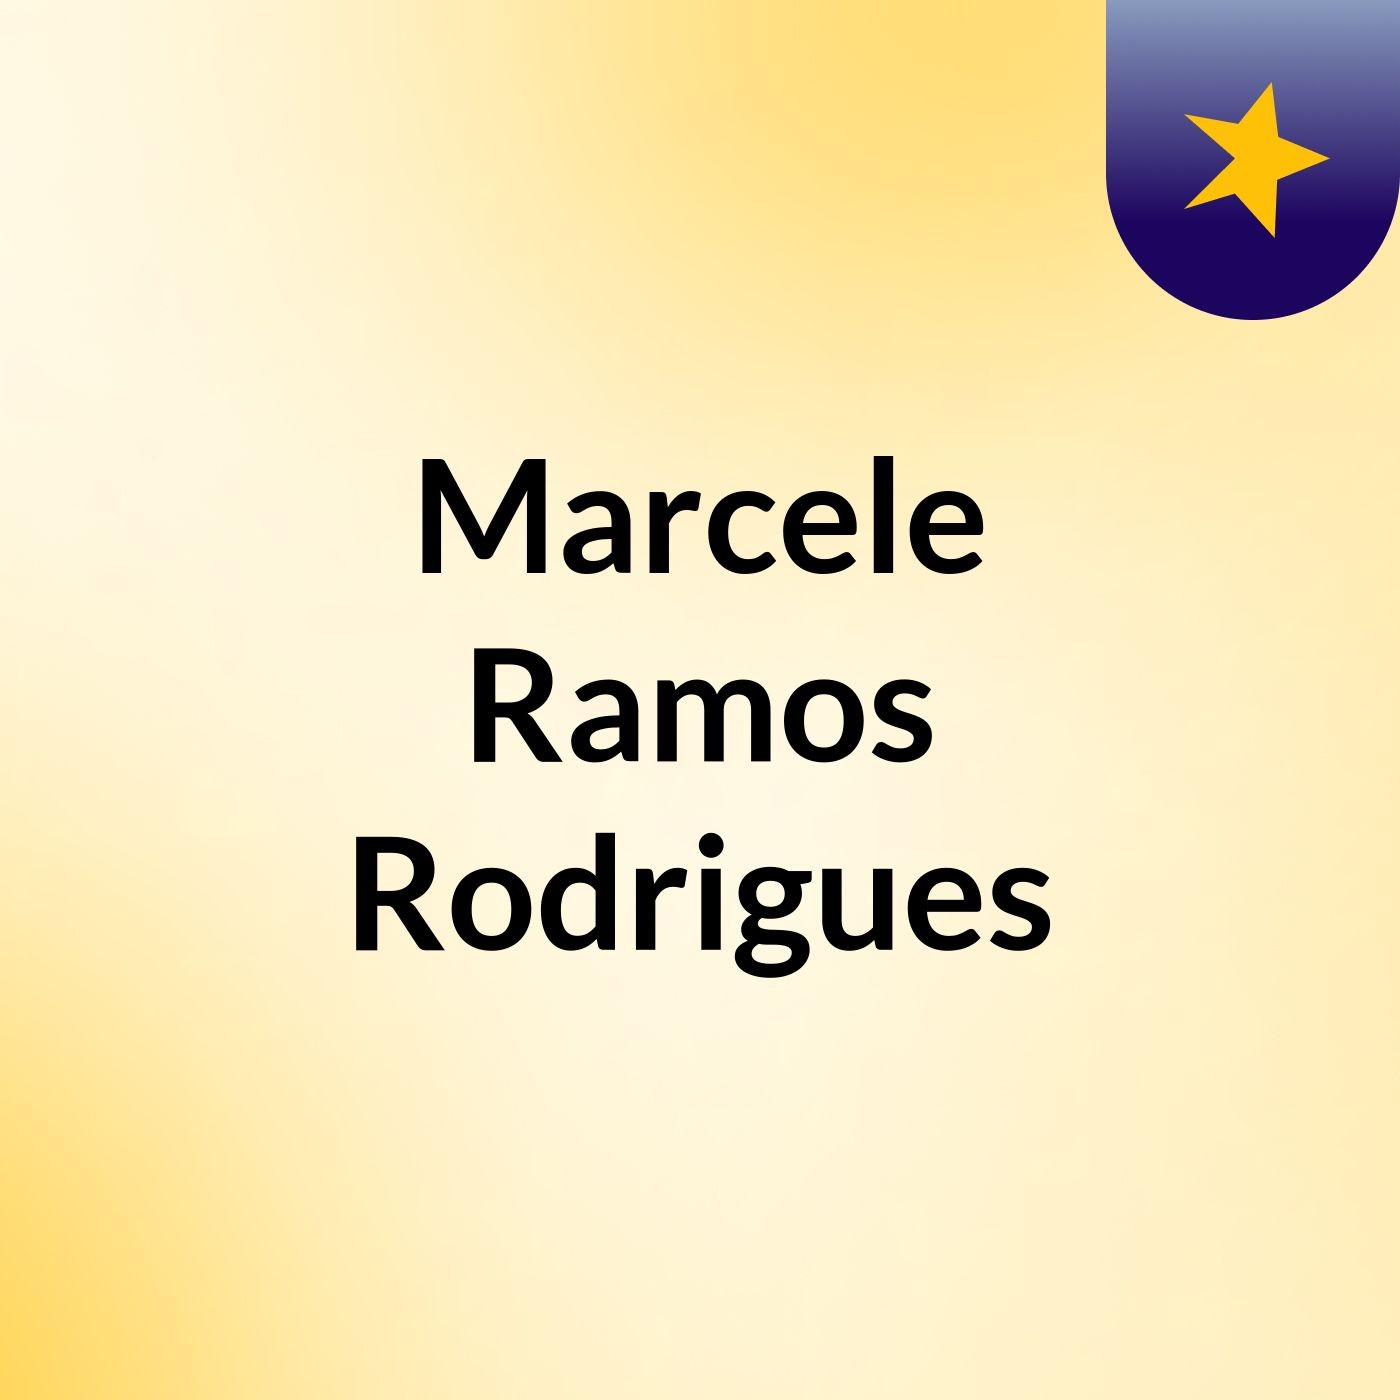 Marcele Ramos Rodrigues